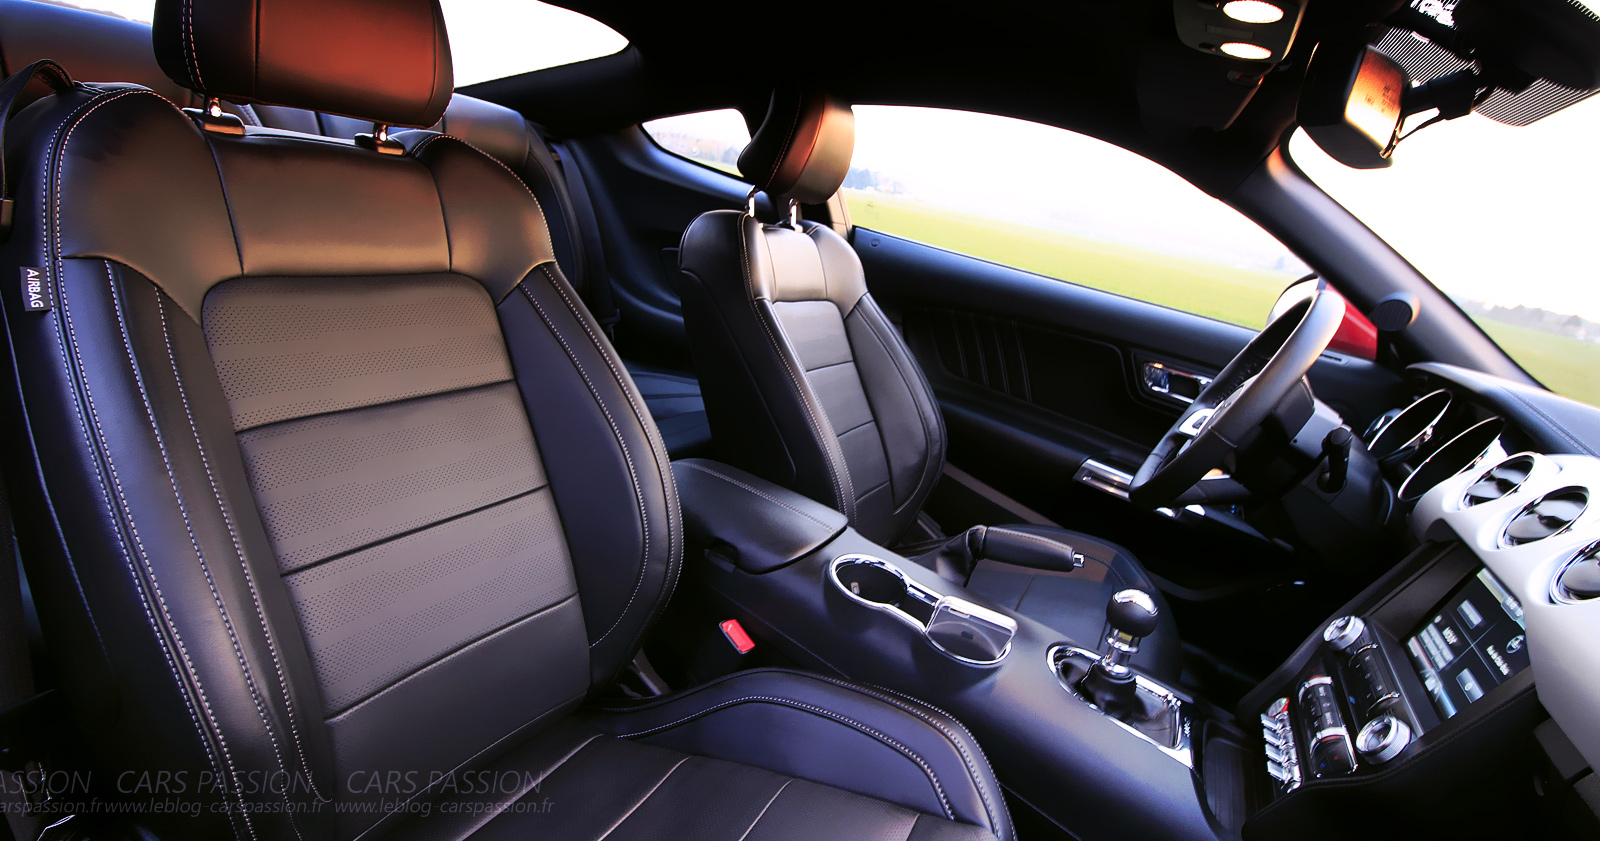 Essai avis test - Ford Mustang 2.3 Ecoboost Fastback intérieur cuir